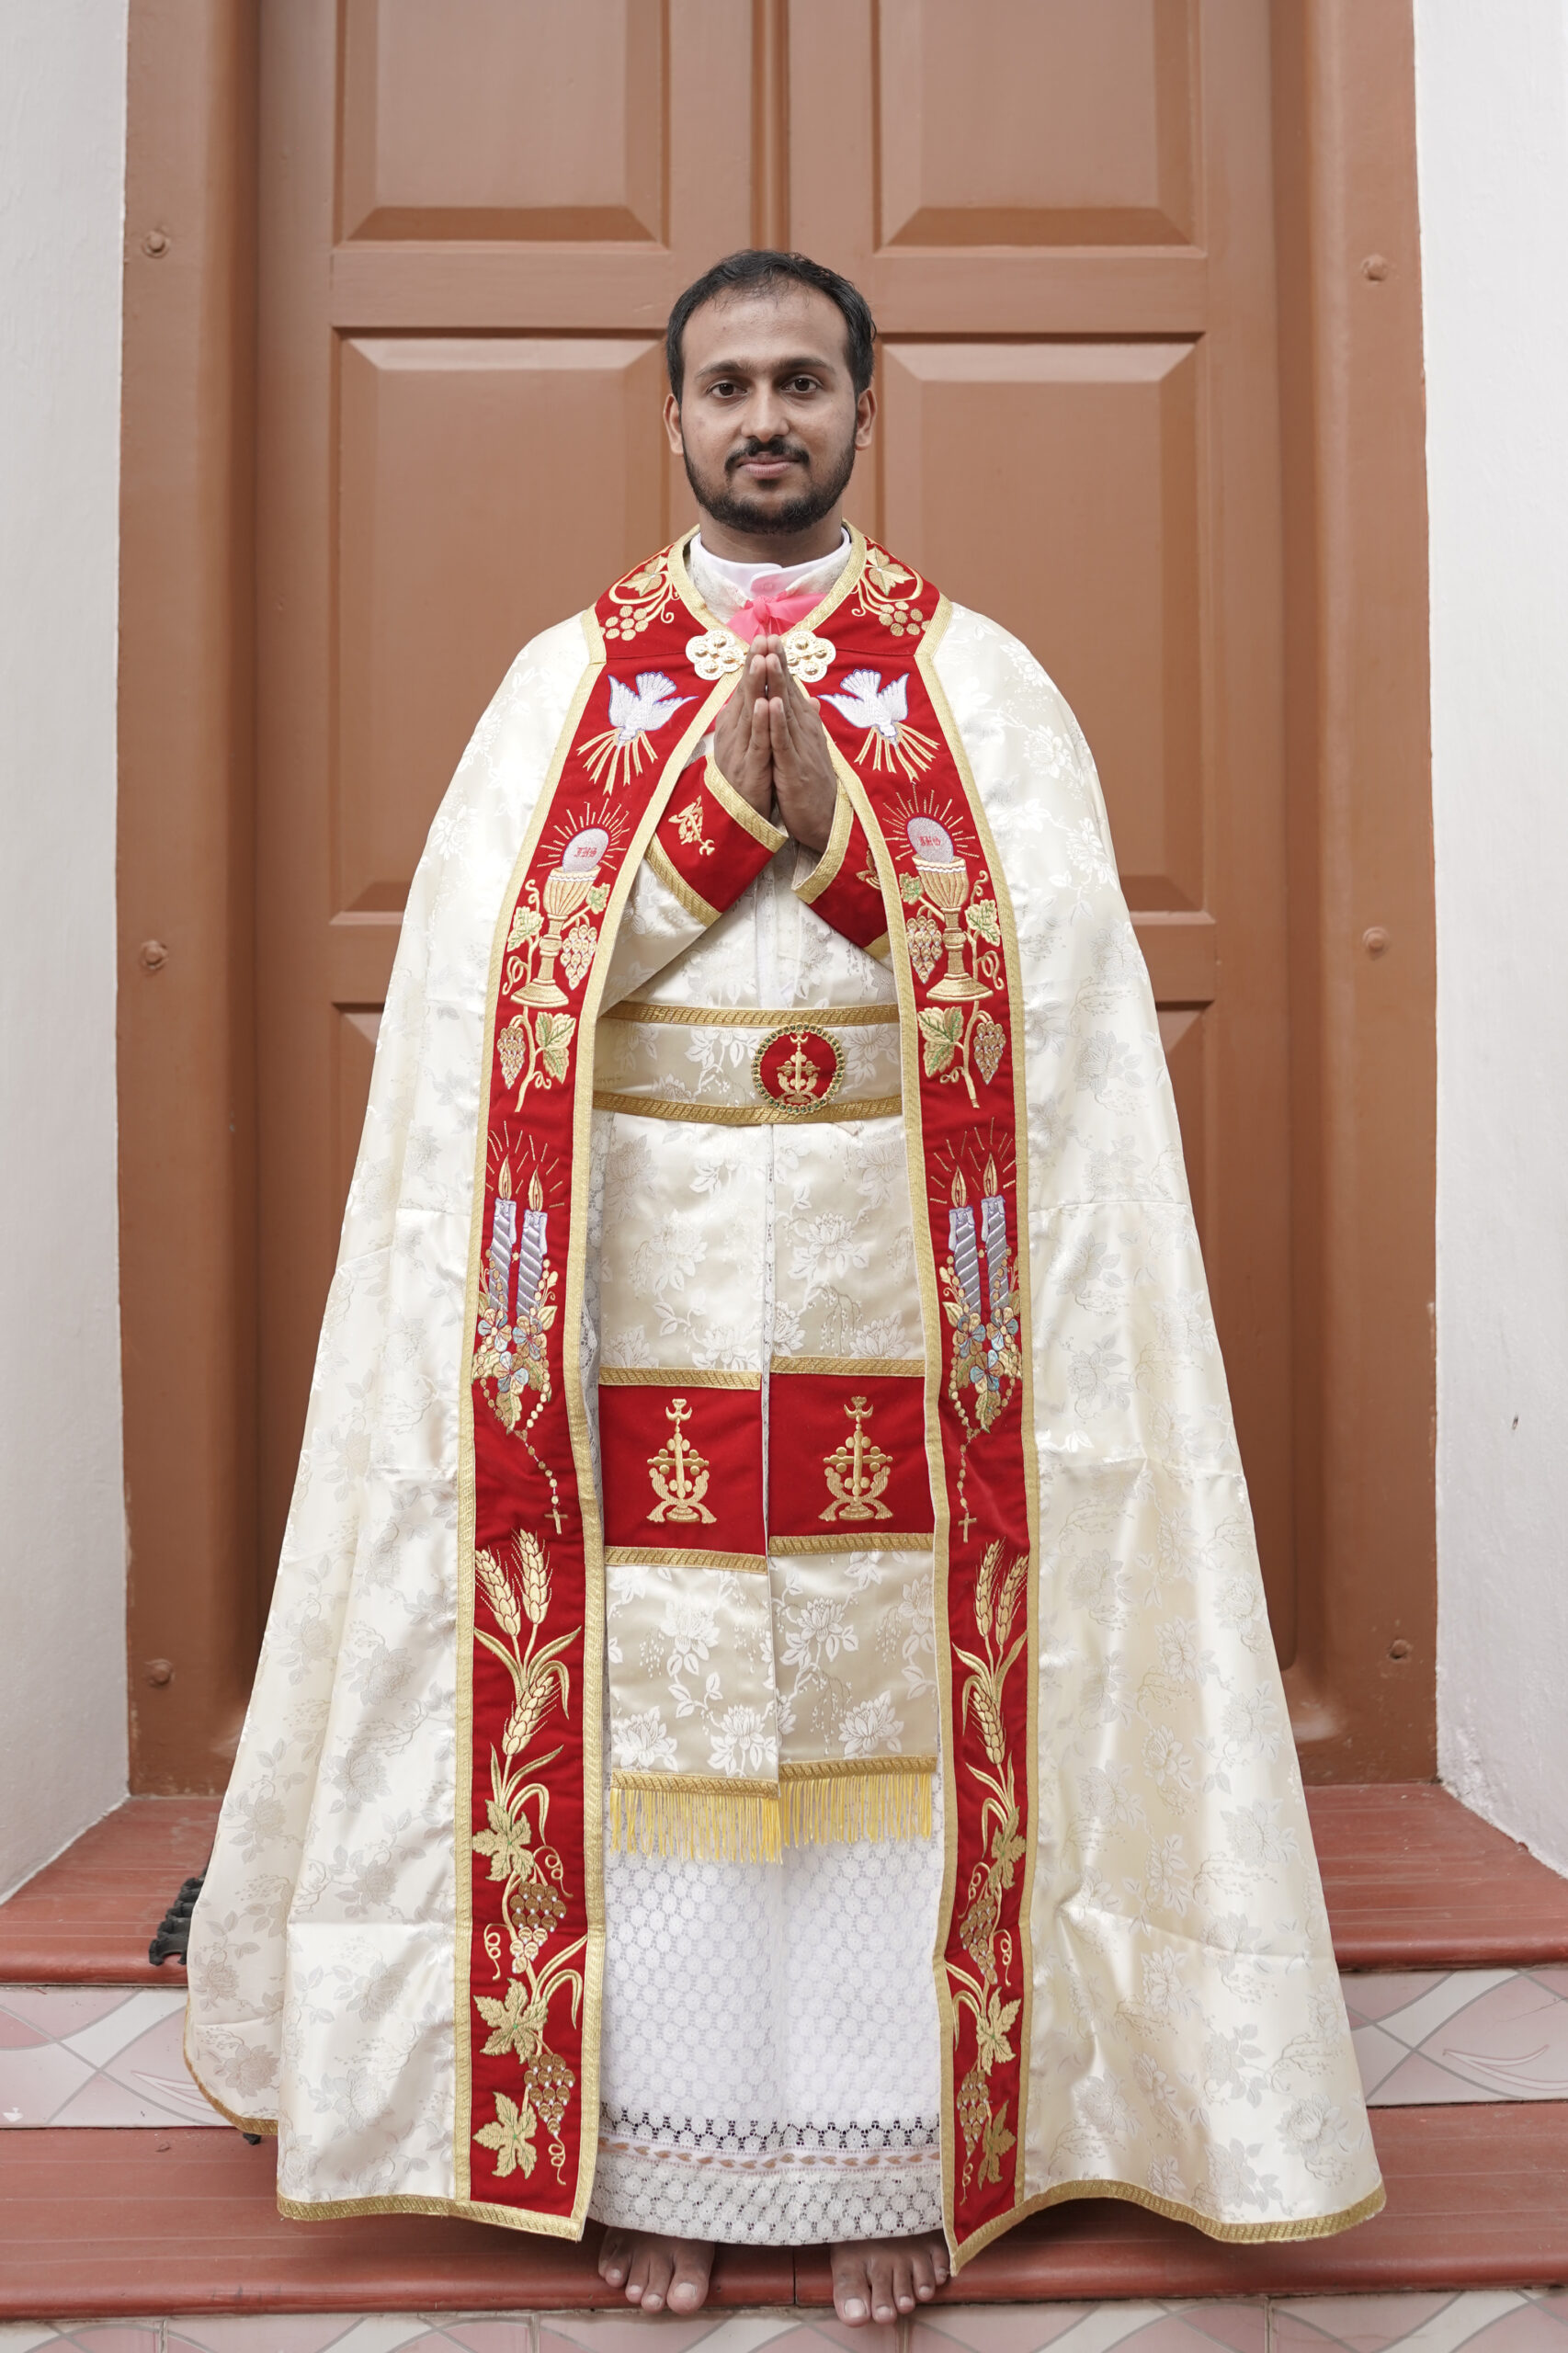 Fr. Joseph Muthuplackal CMF